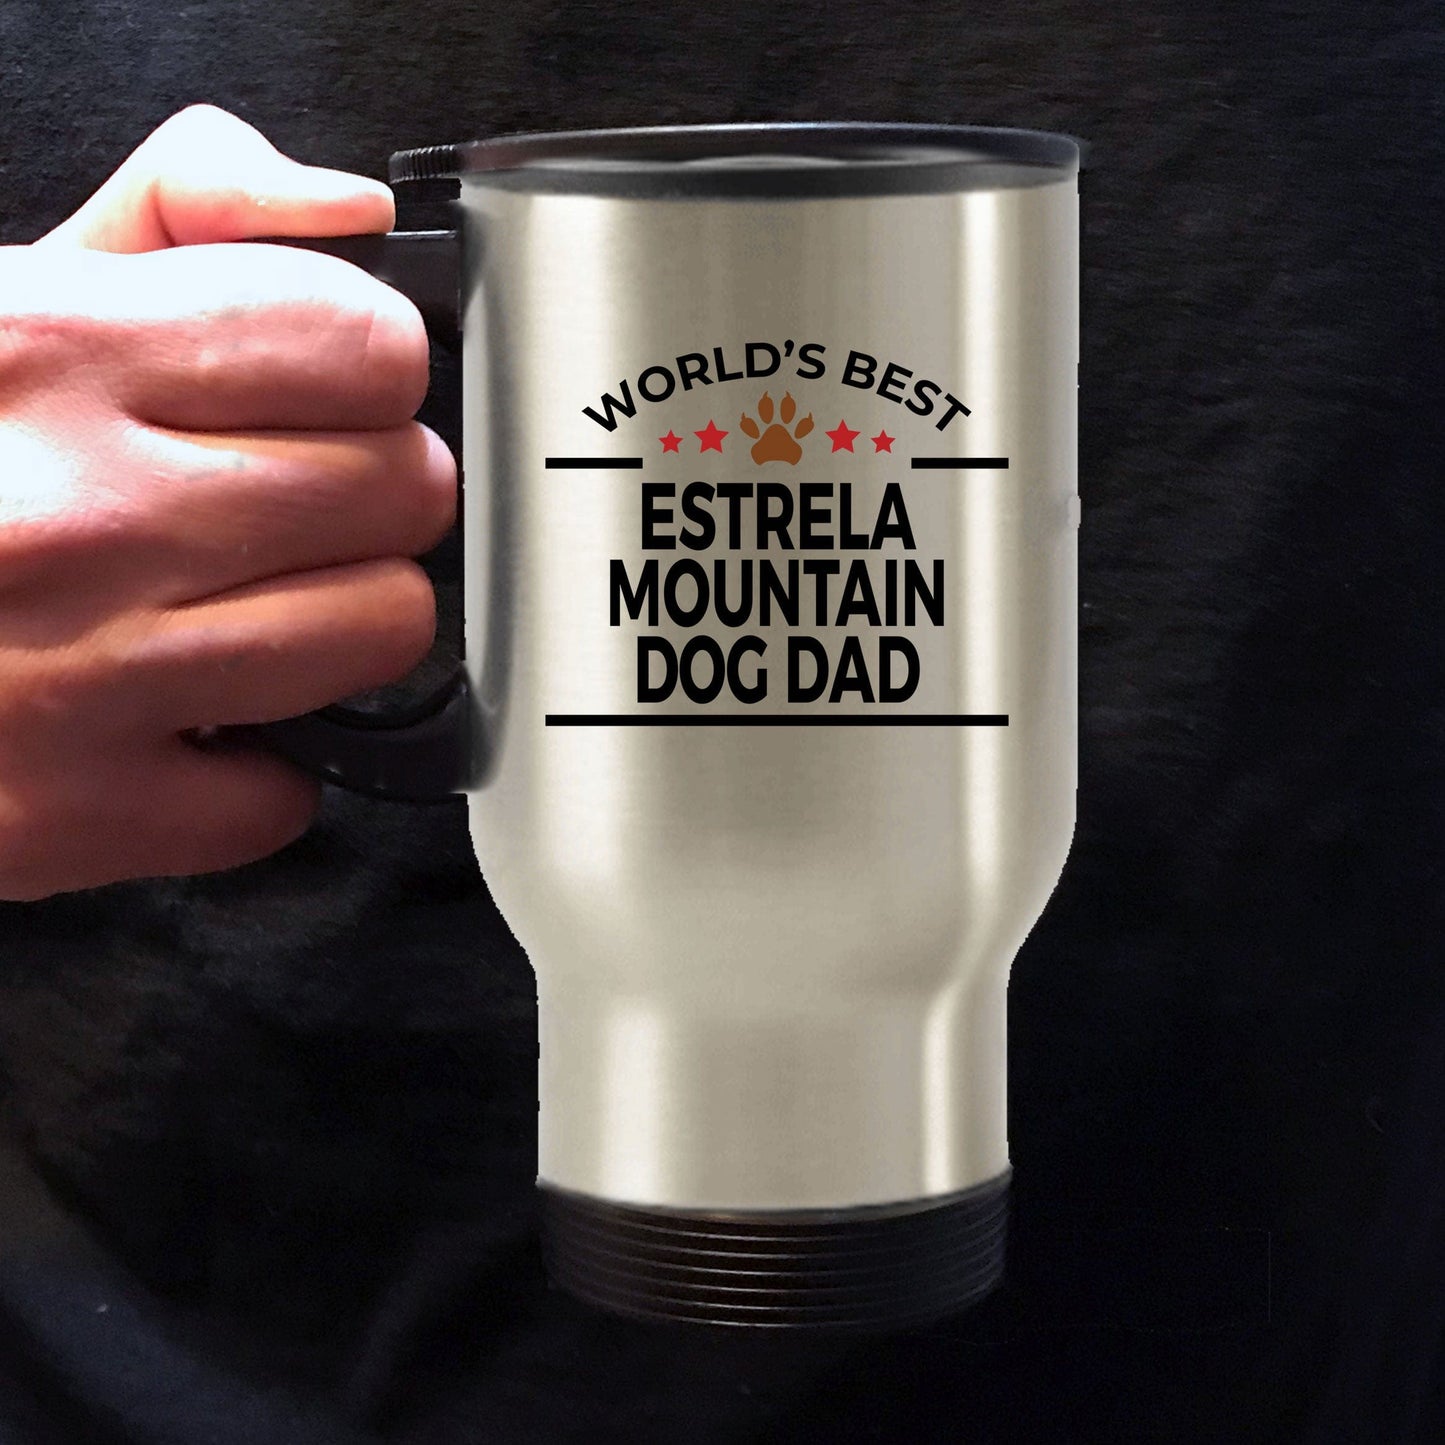 Estrela Mountain Dog Dad Travel Coffee Mug